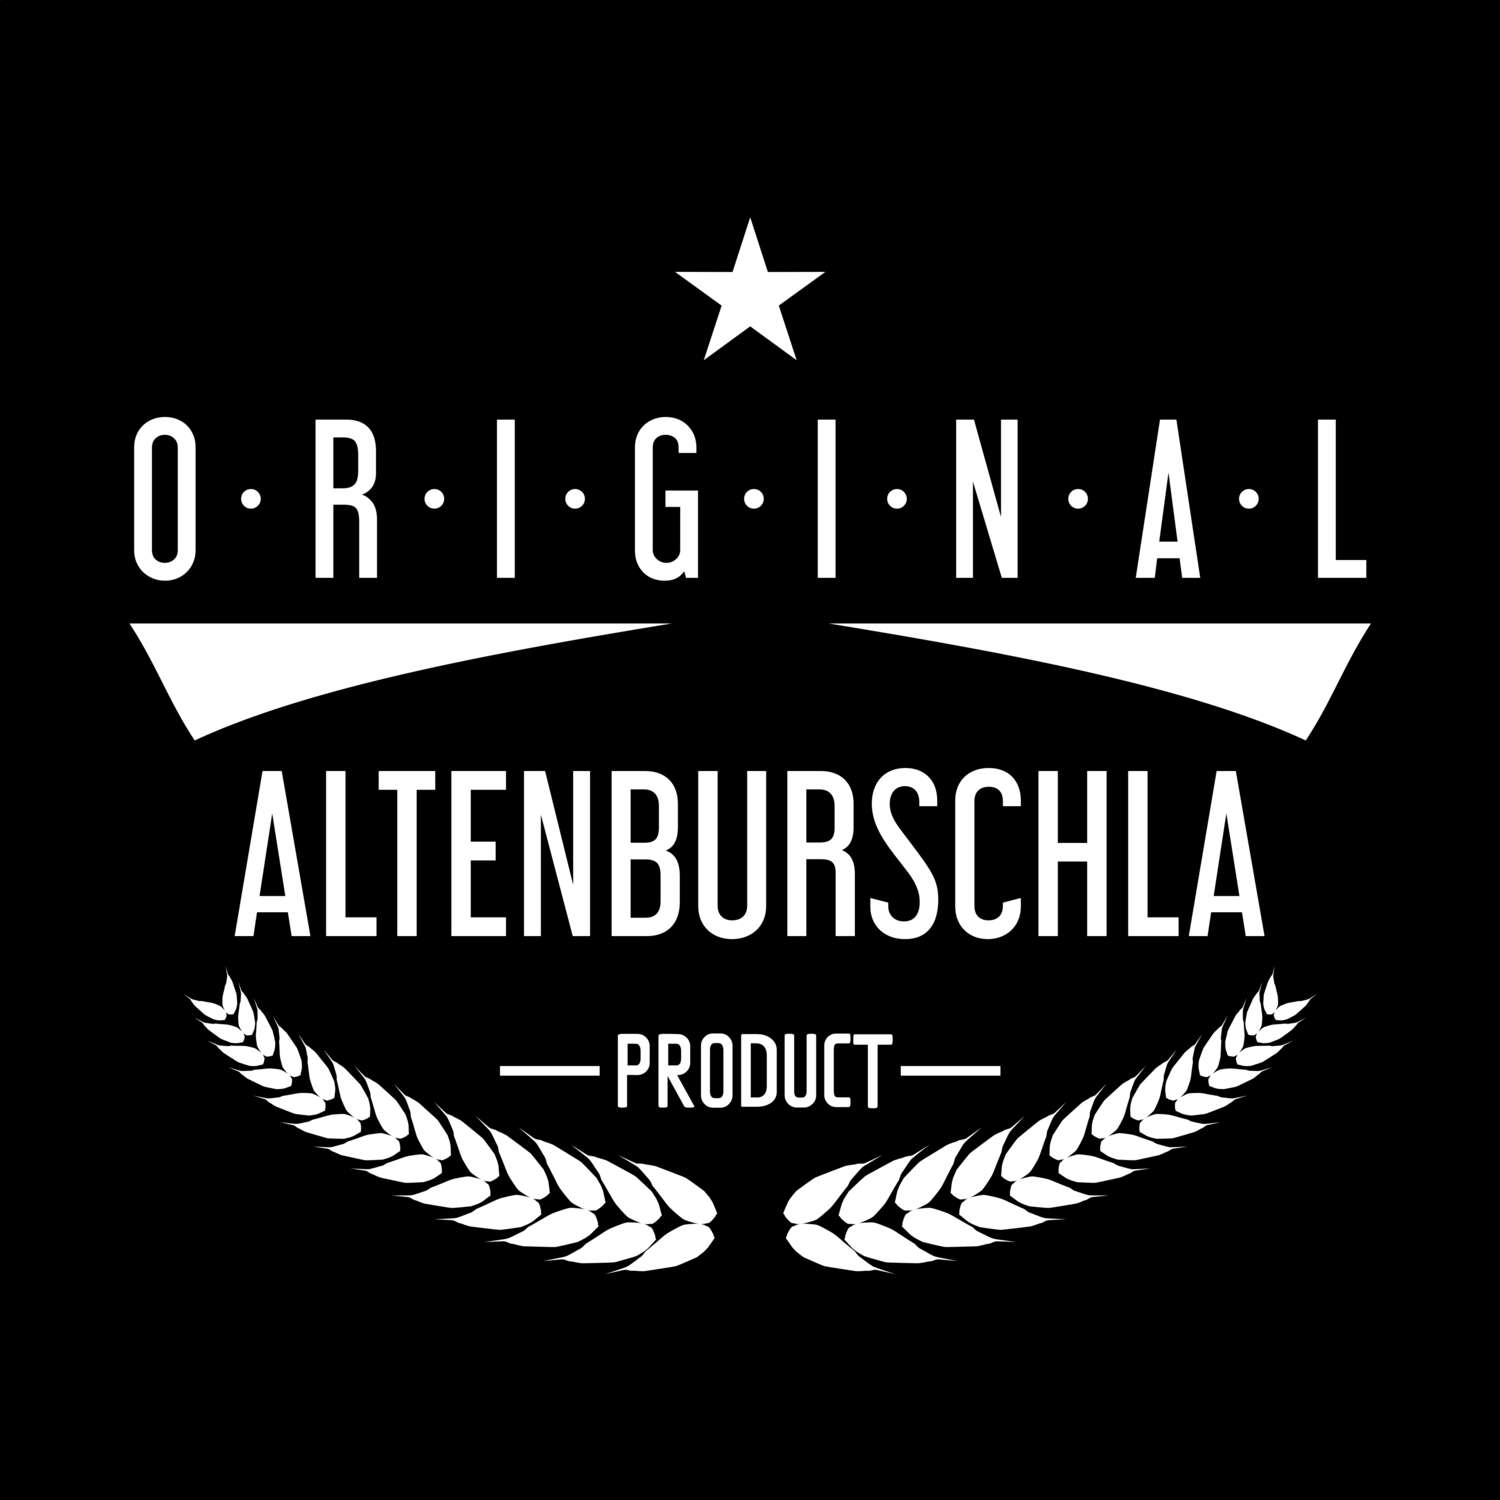 Altenburschla T-Shirt »Original Product«